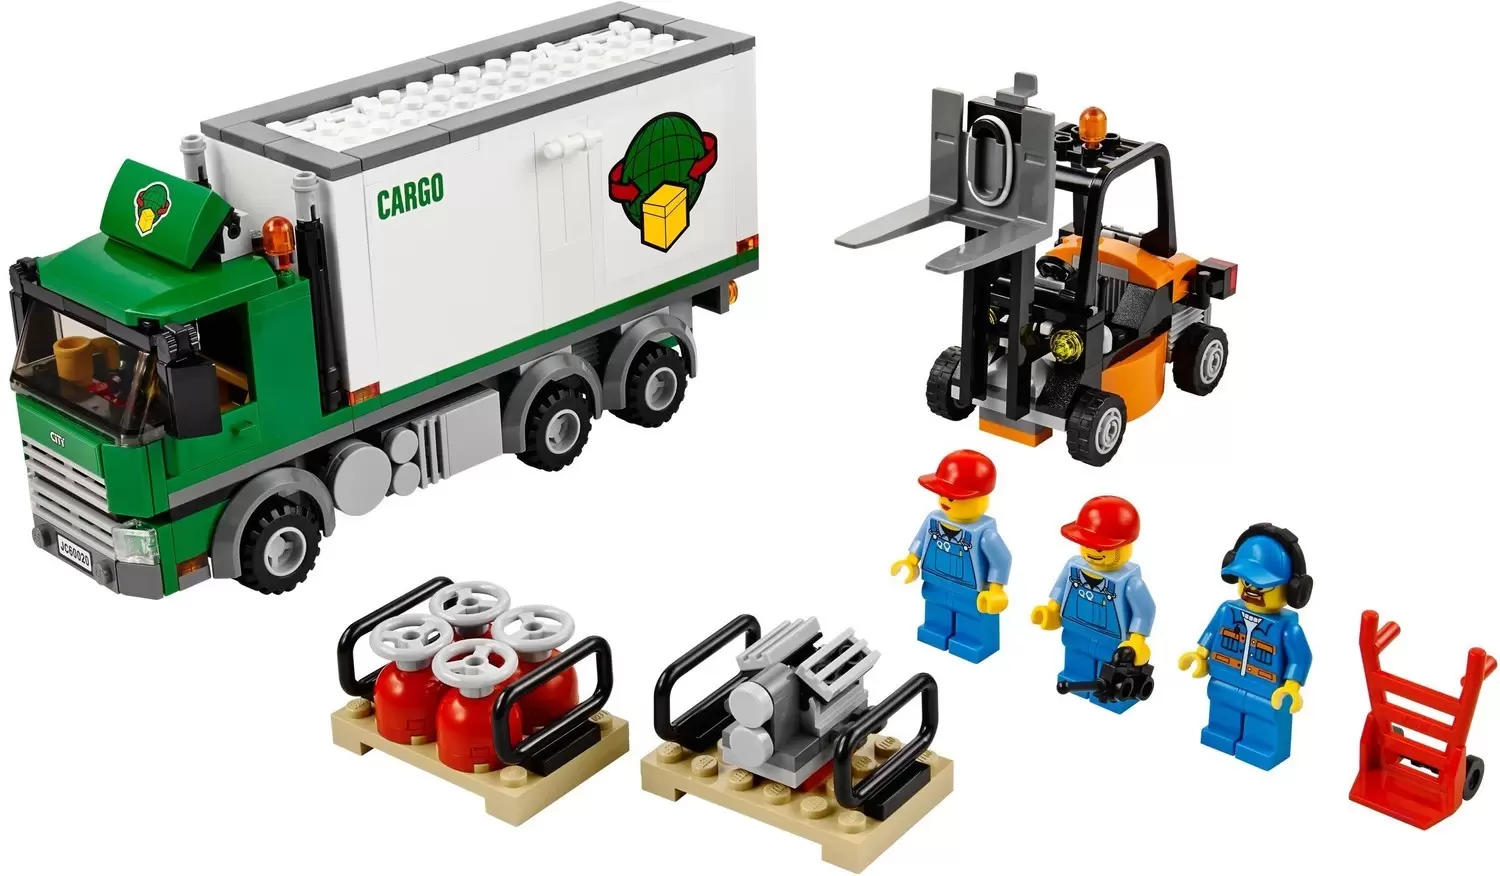 Cargo Truck - LEGO 60020